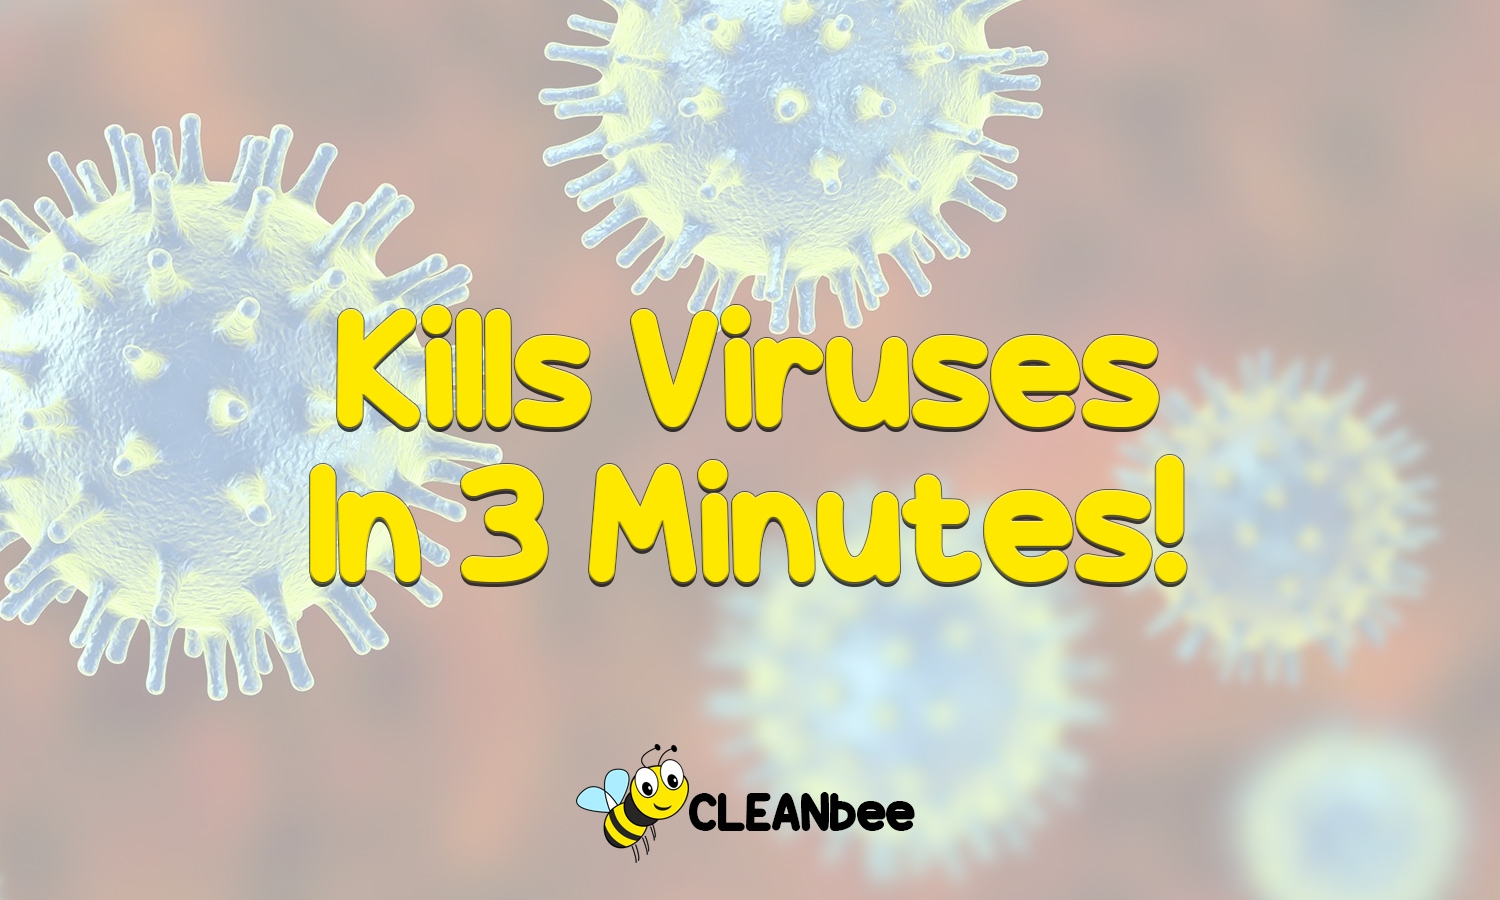 Kills Viruses In 3 Minutes!